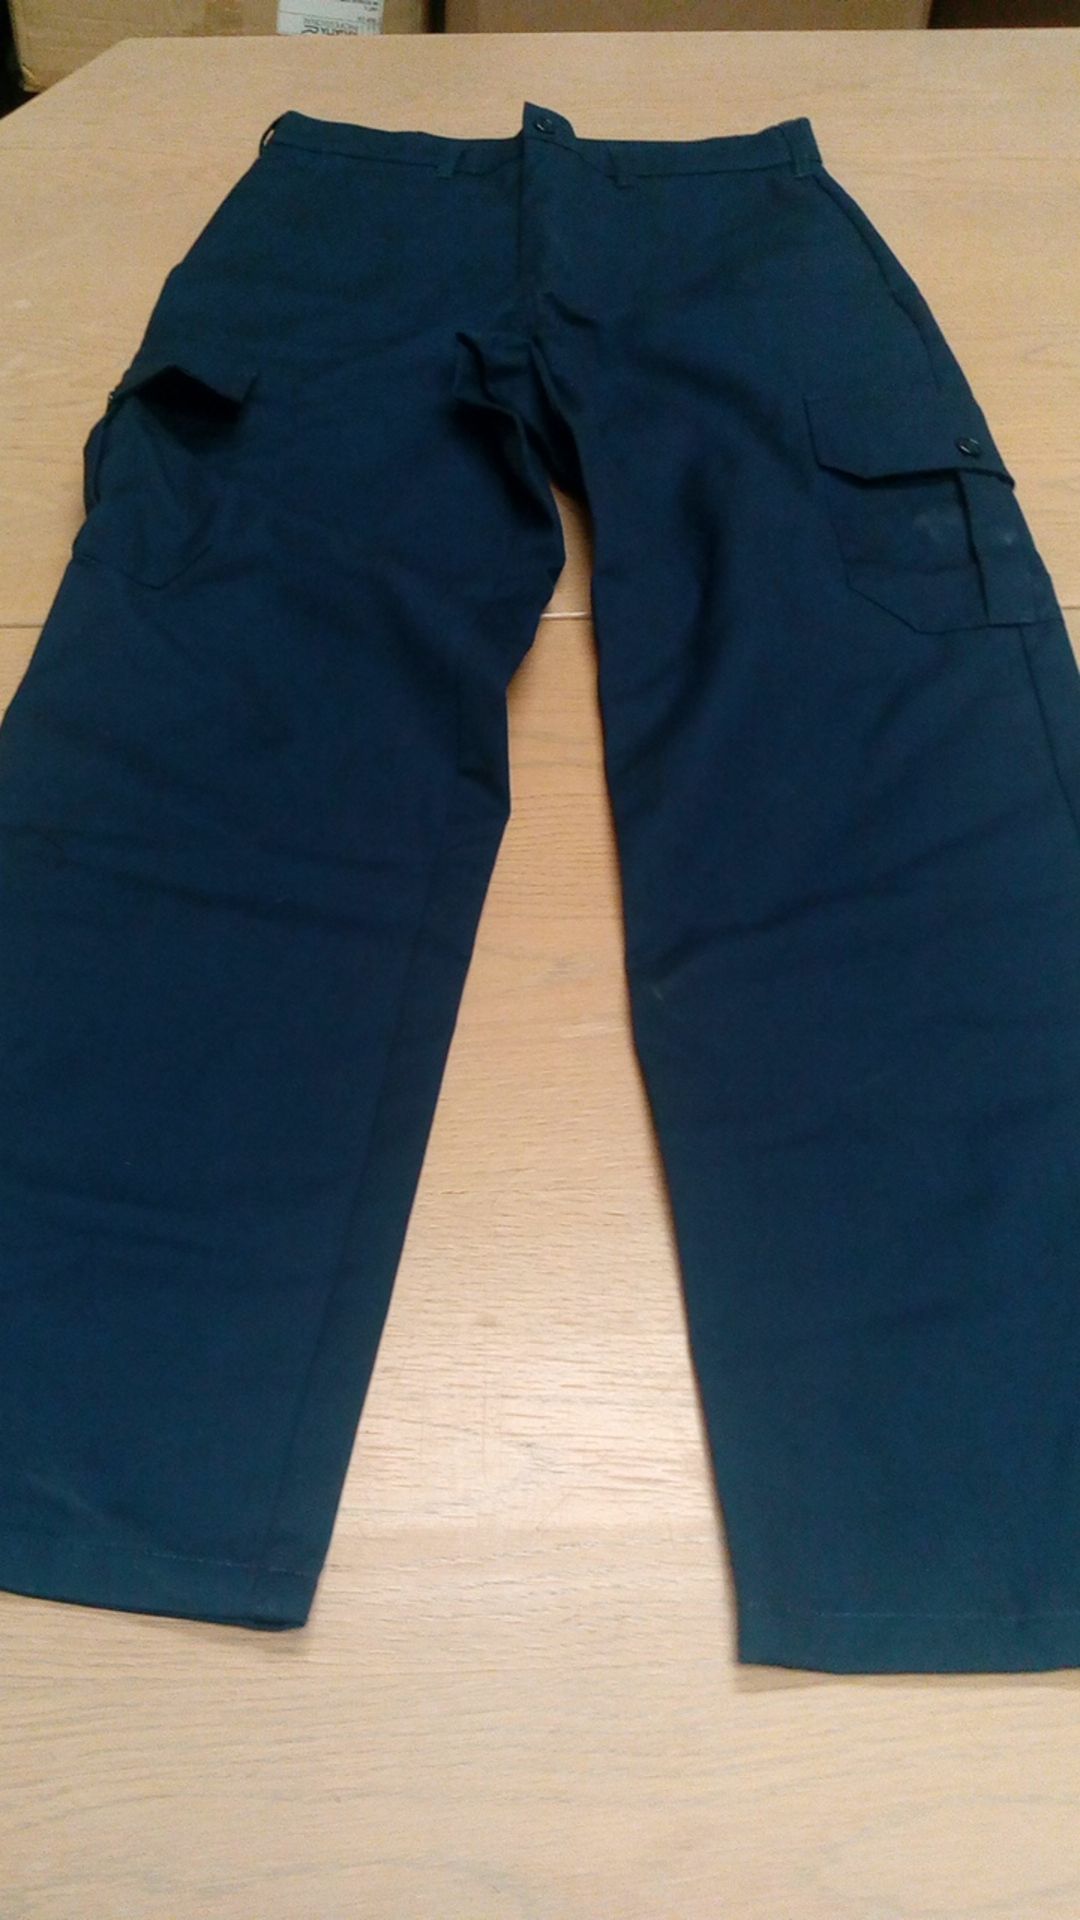 Alexandra workwear size 30 inch mens navy cargo trousersAlexandra workwear new and unused, these